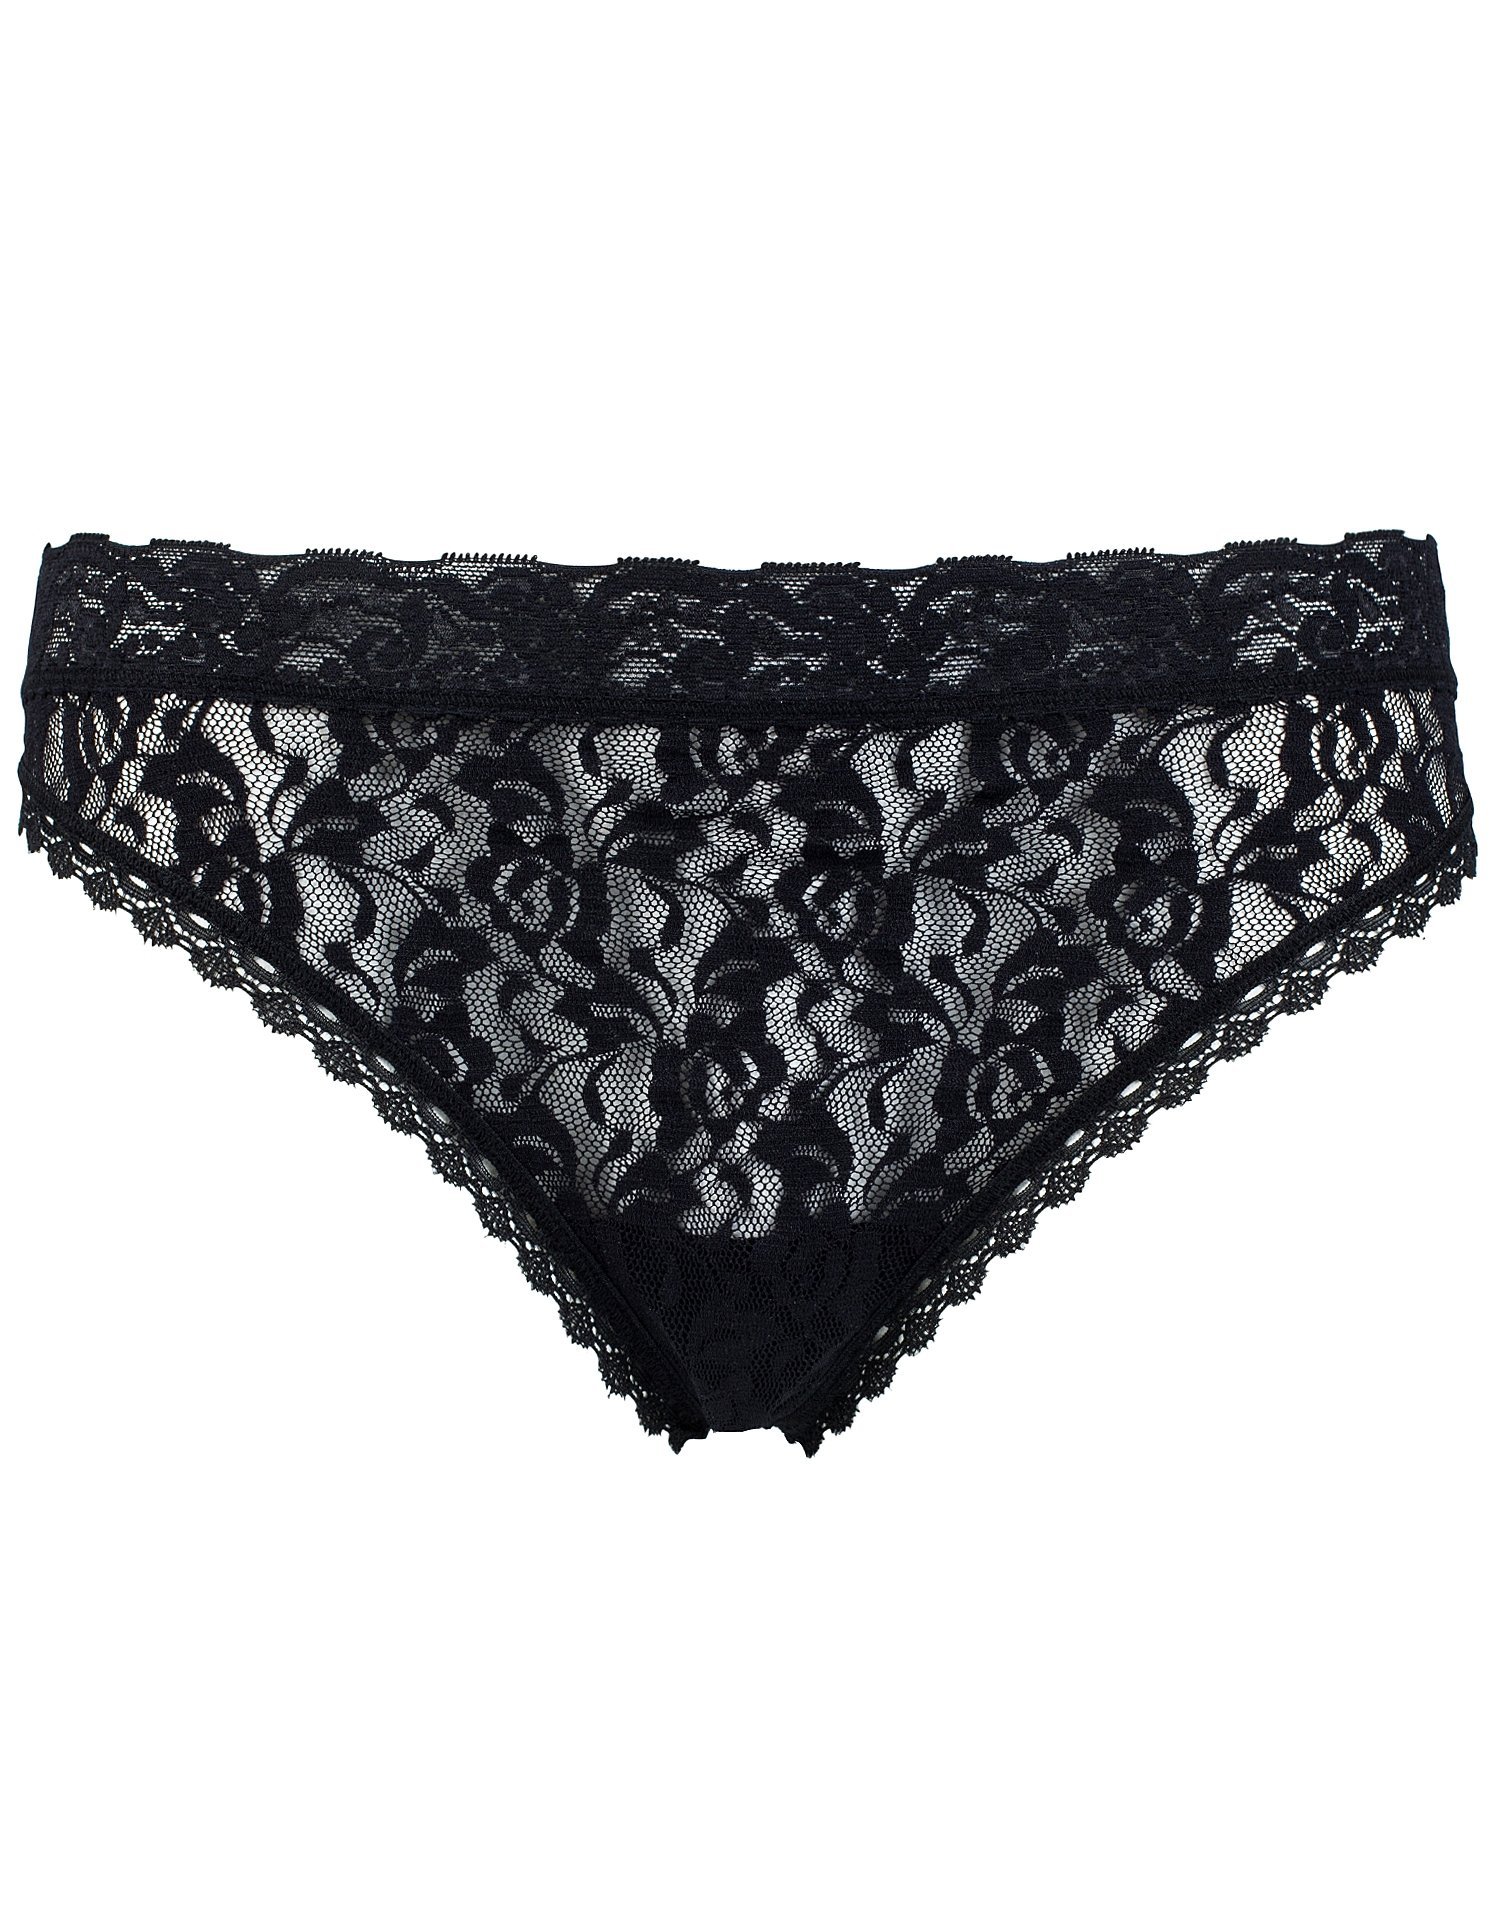 Netti Lace String - Pieces - Black - Briefs - Underwear - Women - Nelly.com